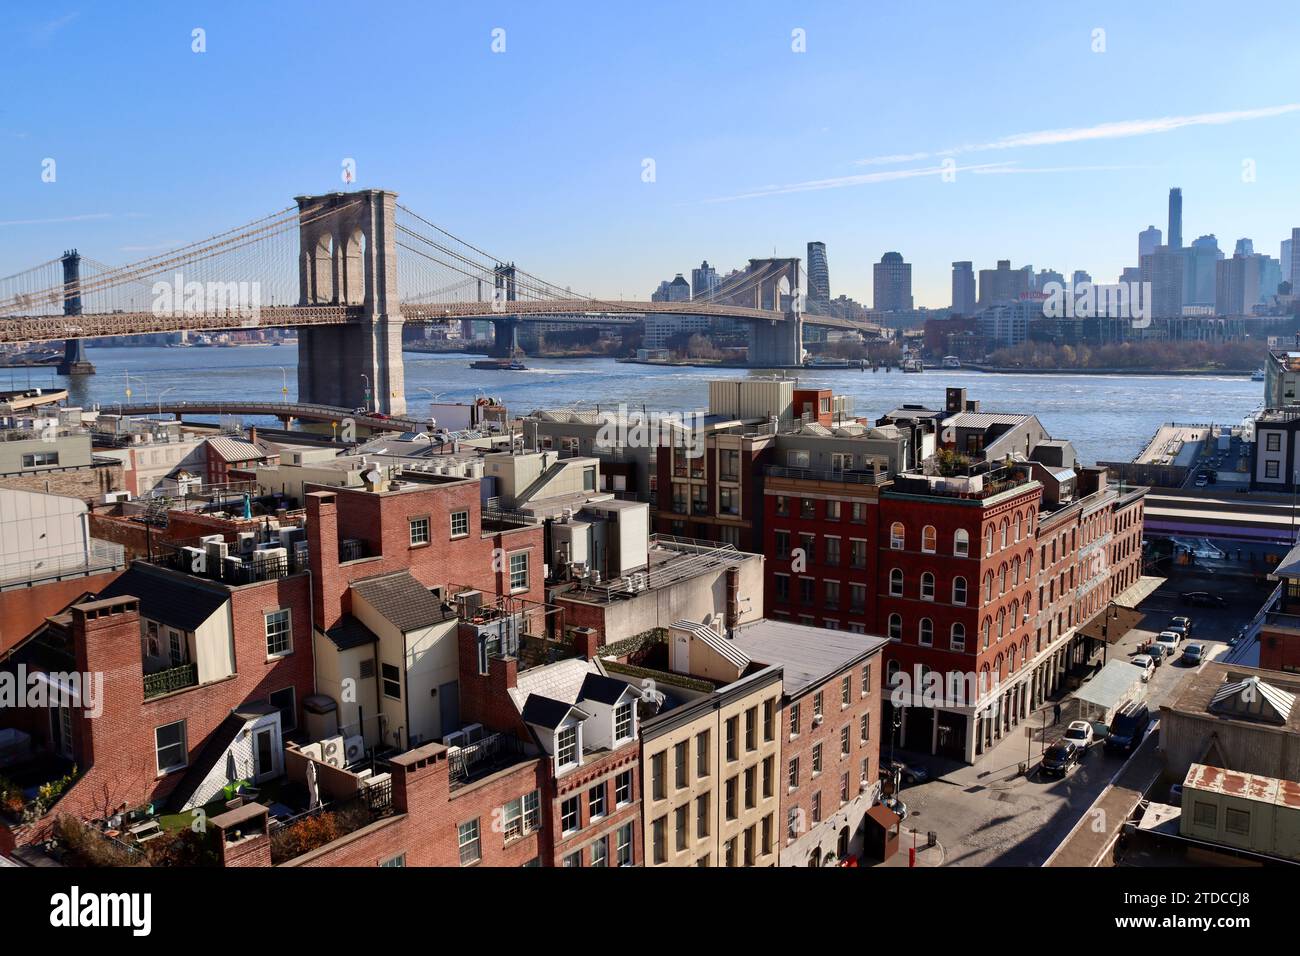 Brooklyn Bridge and Manhattan Bridge seen over the old South Street Seaport district in lower Manhattan, New York Stock Photo